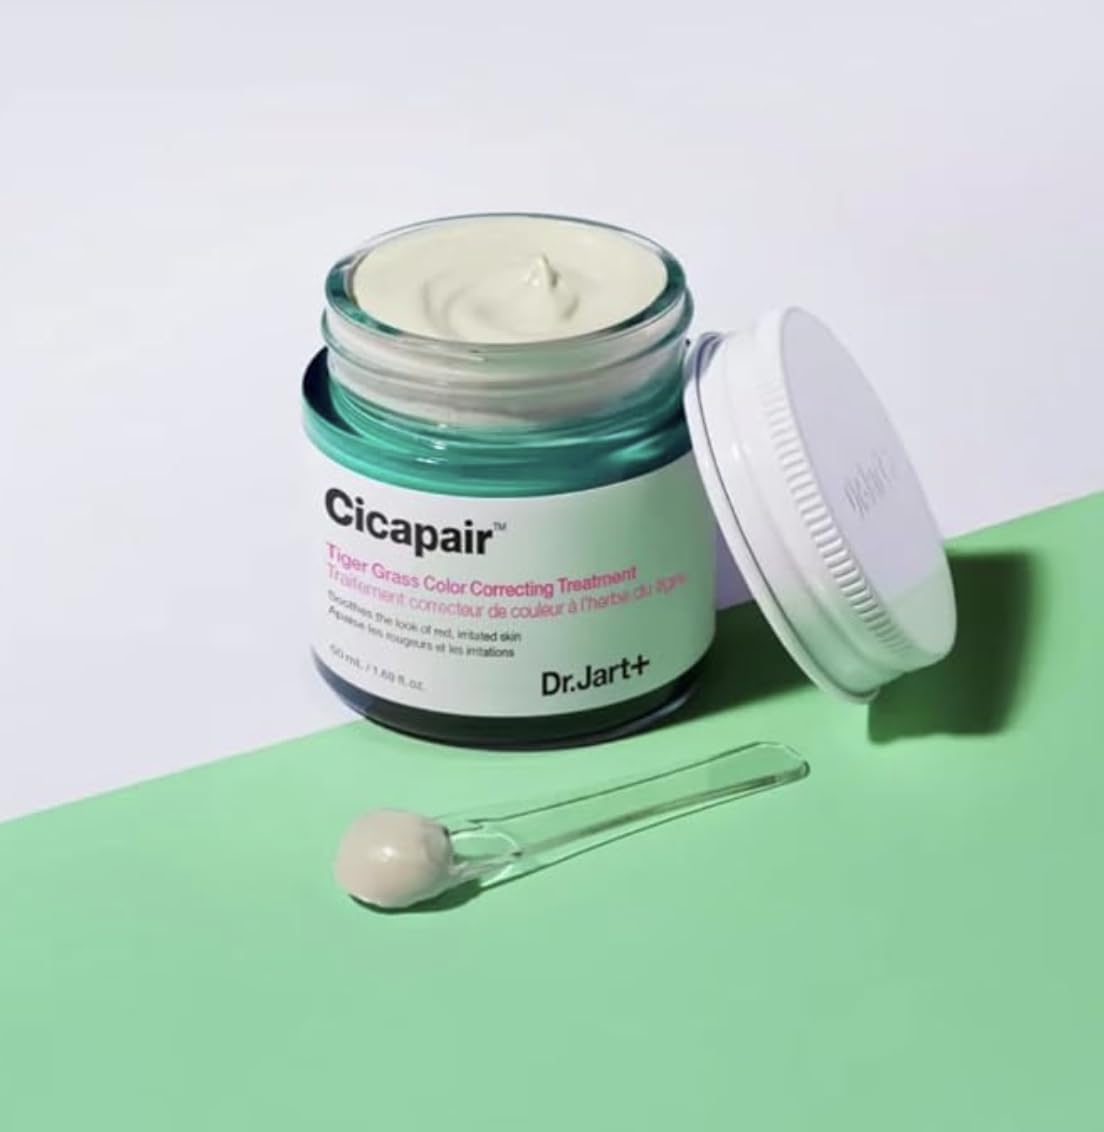 Dr.Jart+ Cicapair Tiger Grass Color Correcting Treatment 50ml / 1.69 fl.oz - KosBeauty